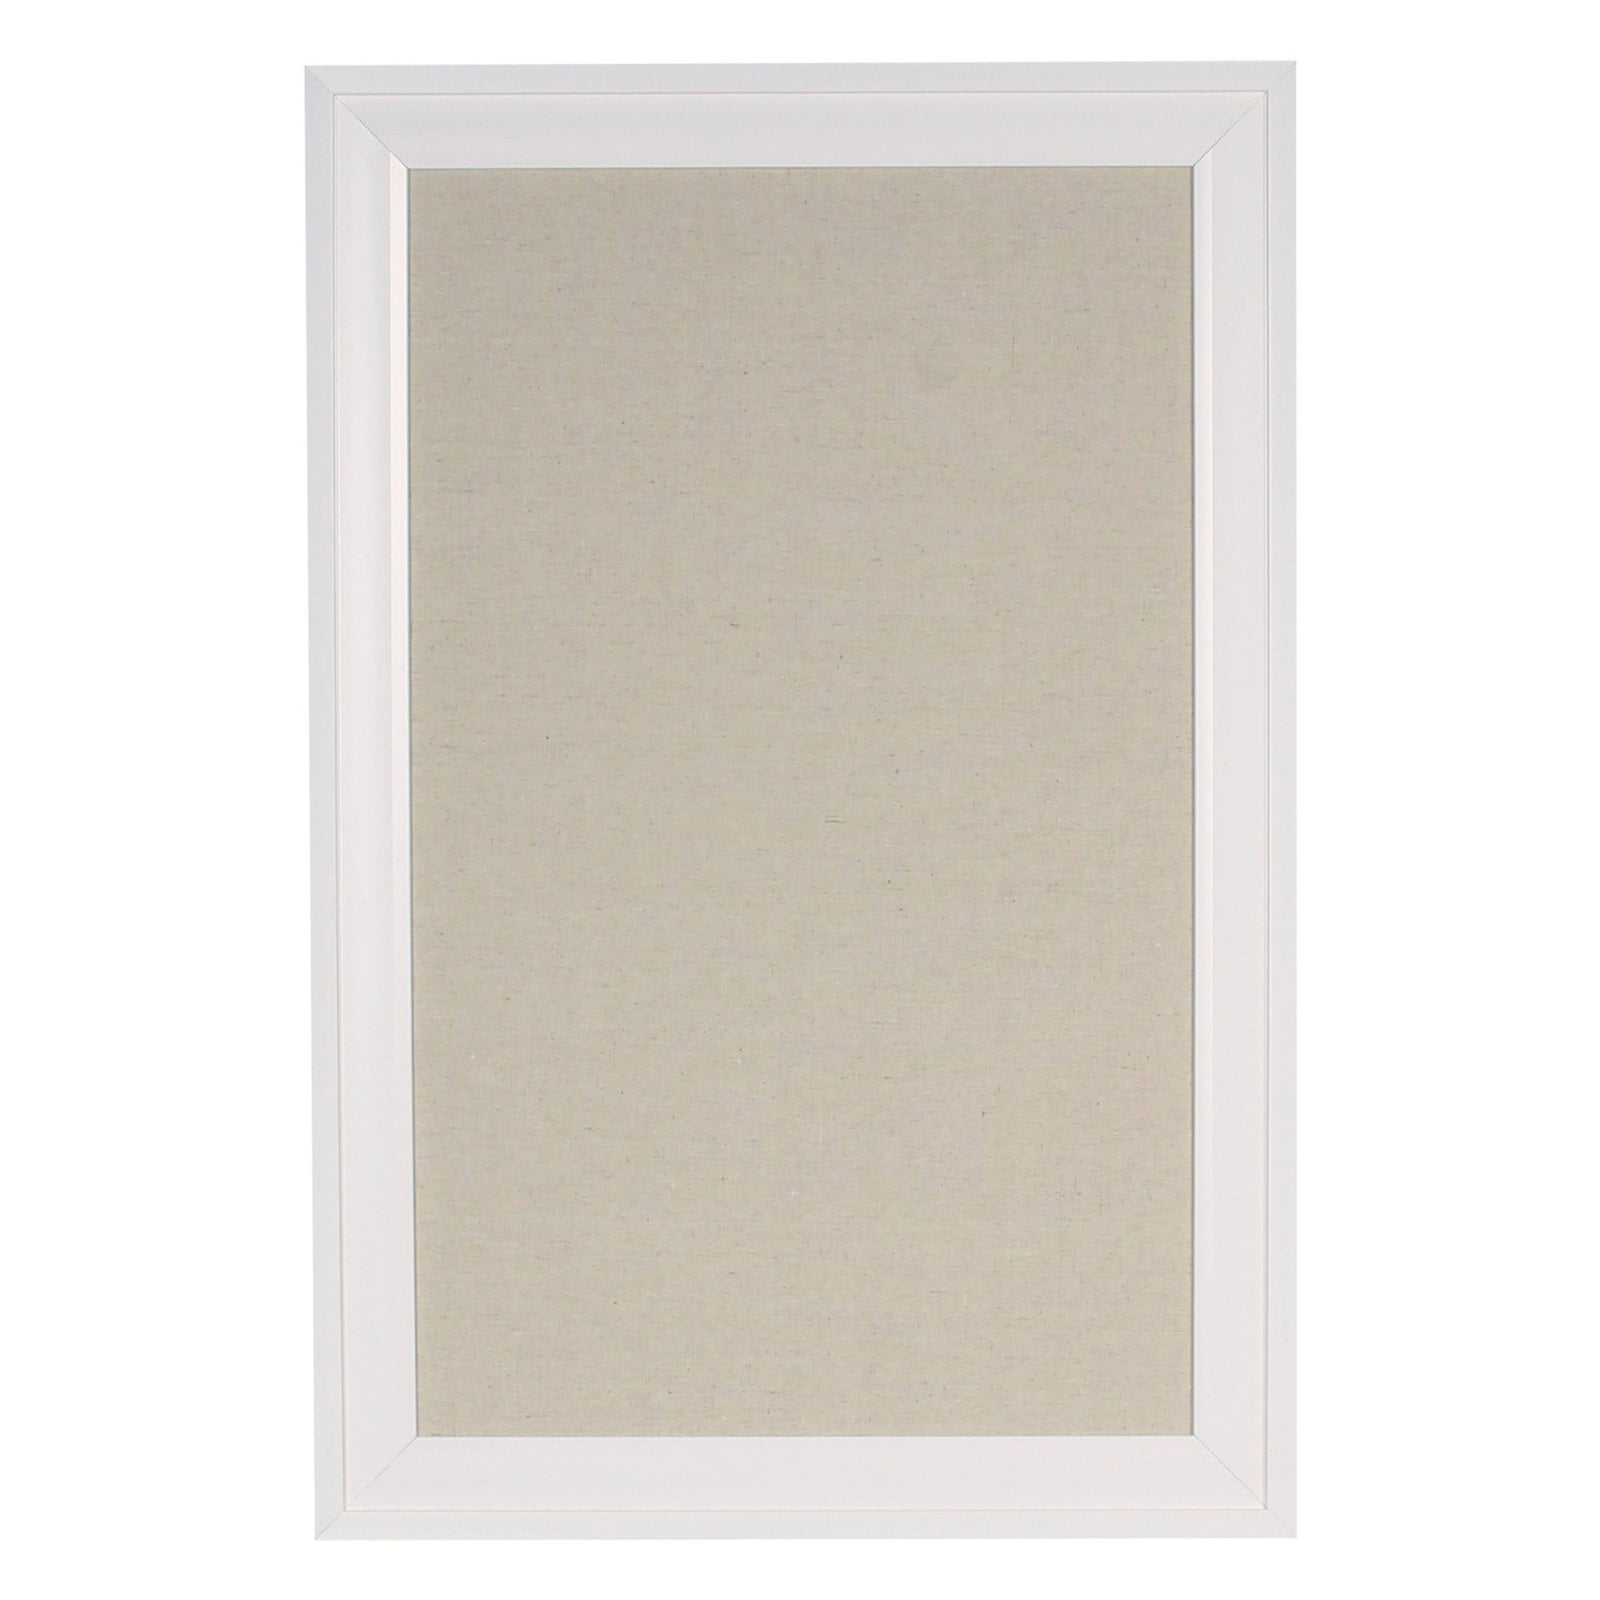 Bosc Linen Fabric Pinboard Wall Organization Board - White - Walmart.com